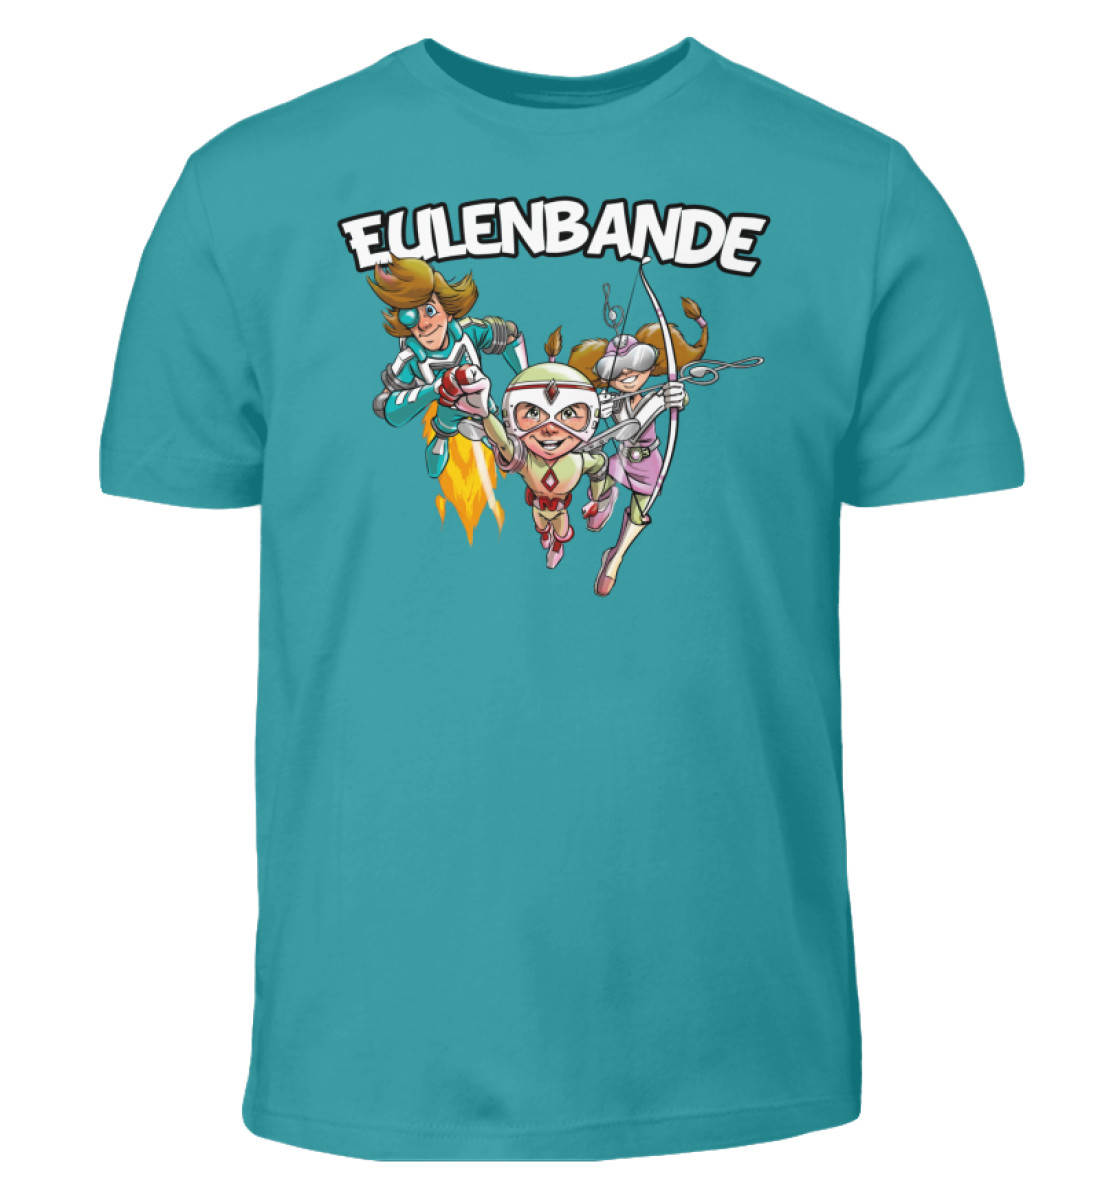 Die 3 Superhelden der Eulenbande - Kinder T-Shirt-1242